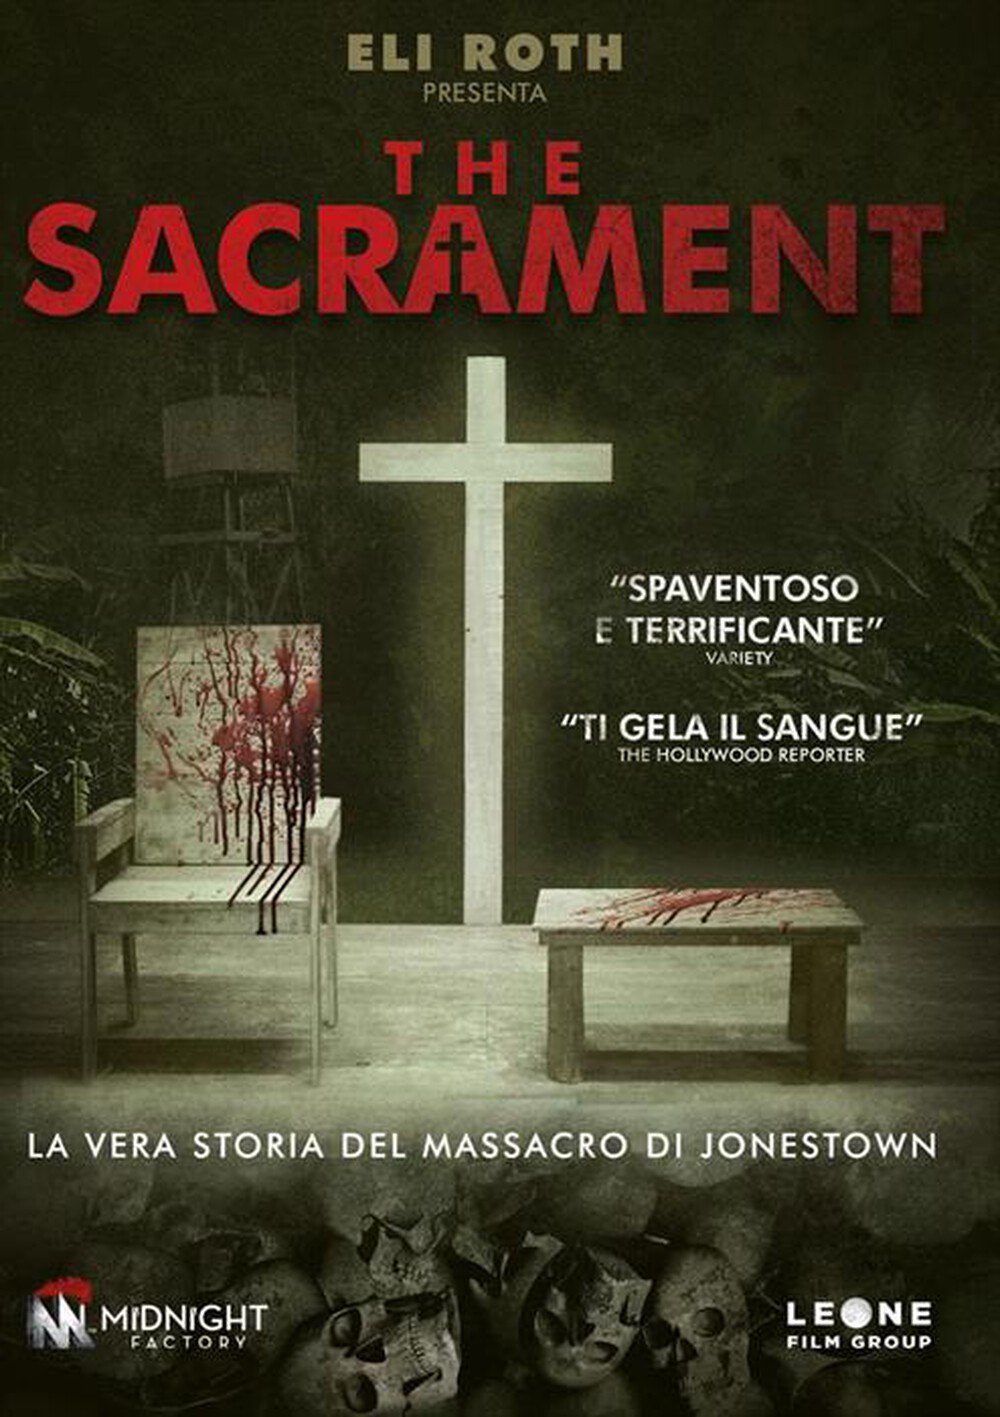 "Midnight Factory - Sacrament (The) (Standard Edition)"